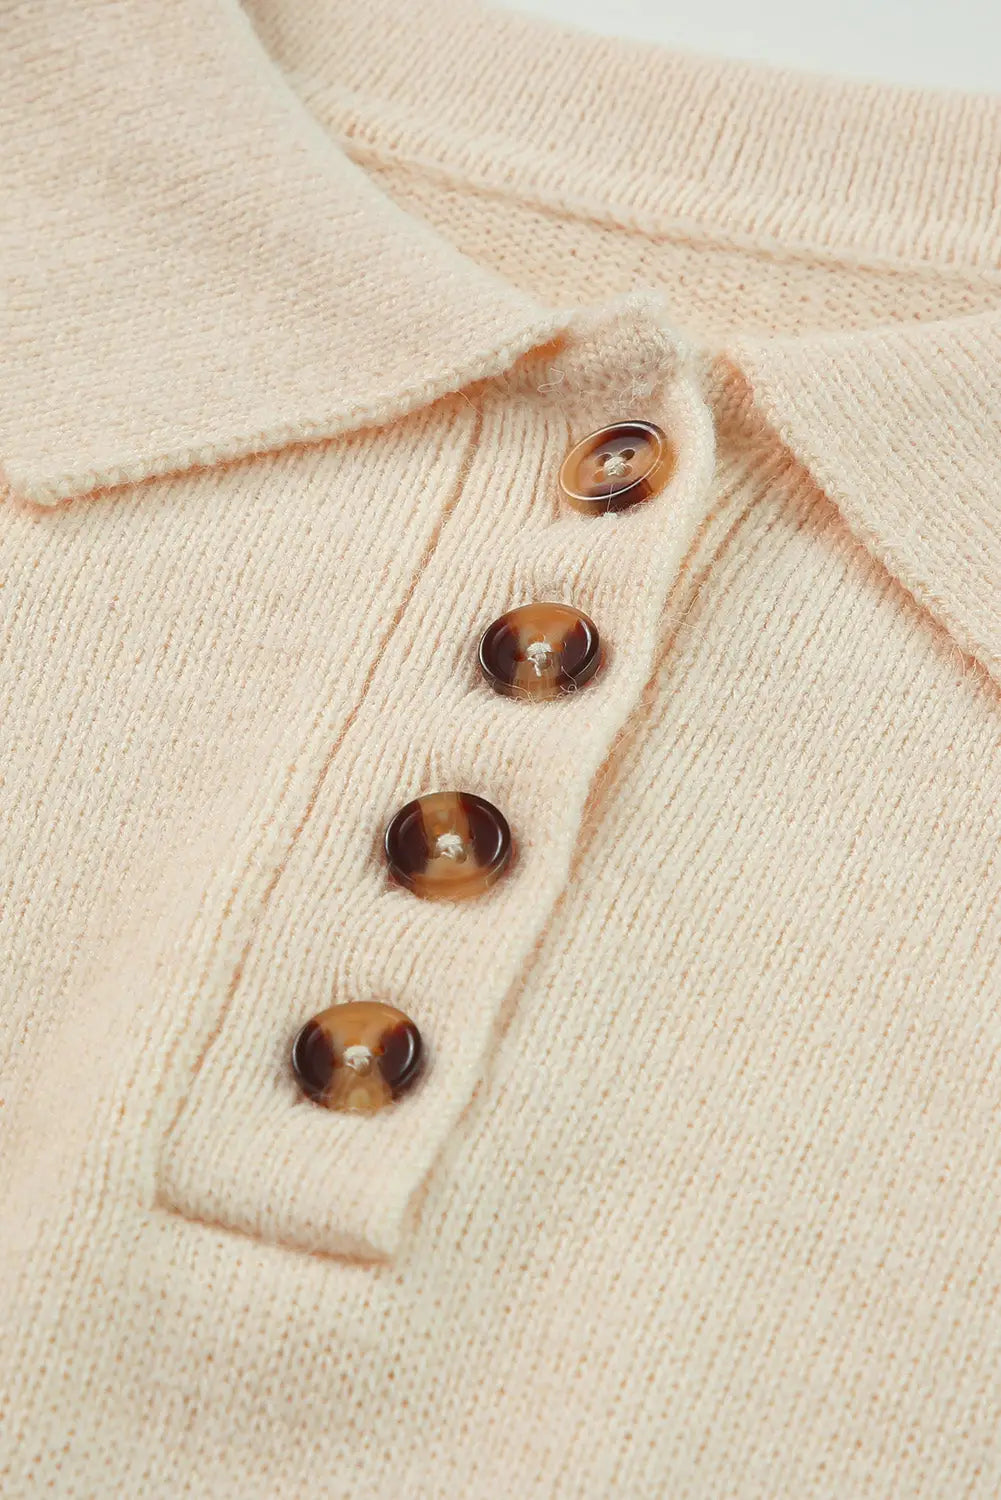 Apricot polo collar knitted mini sweater shift dress -